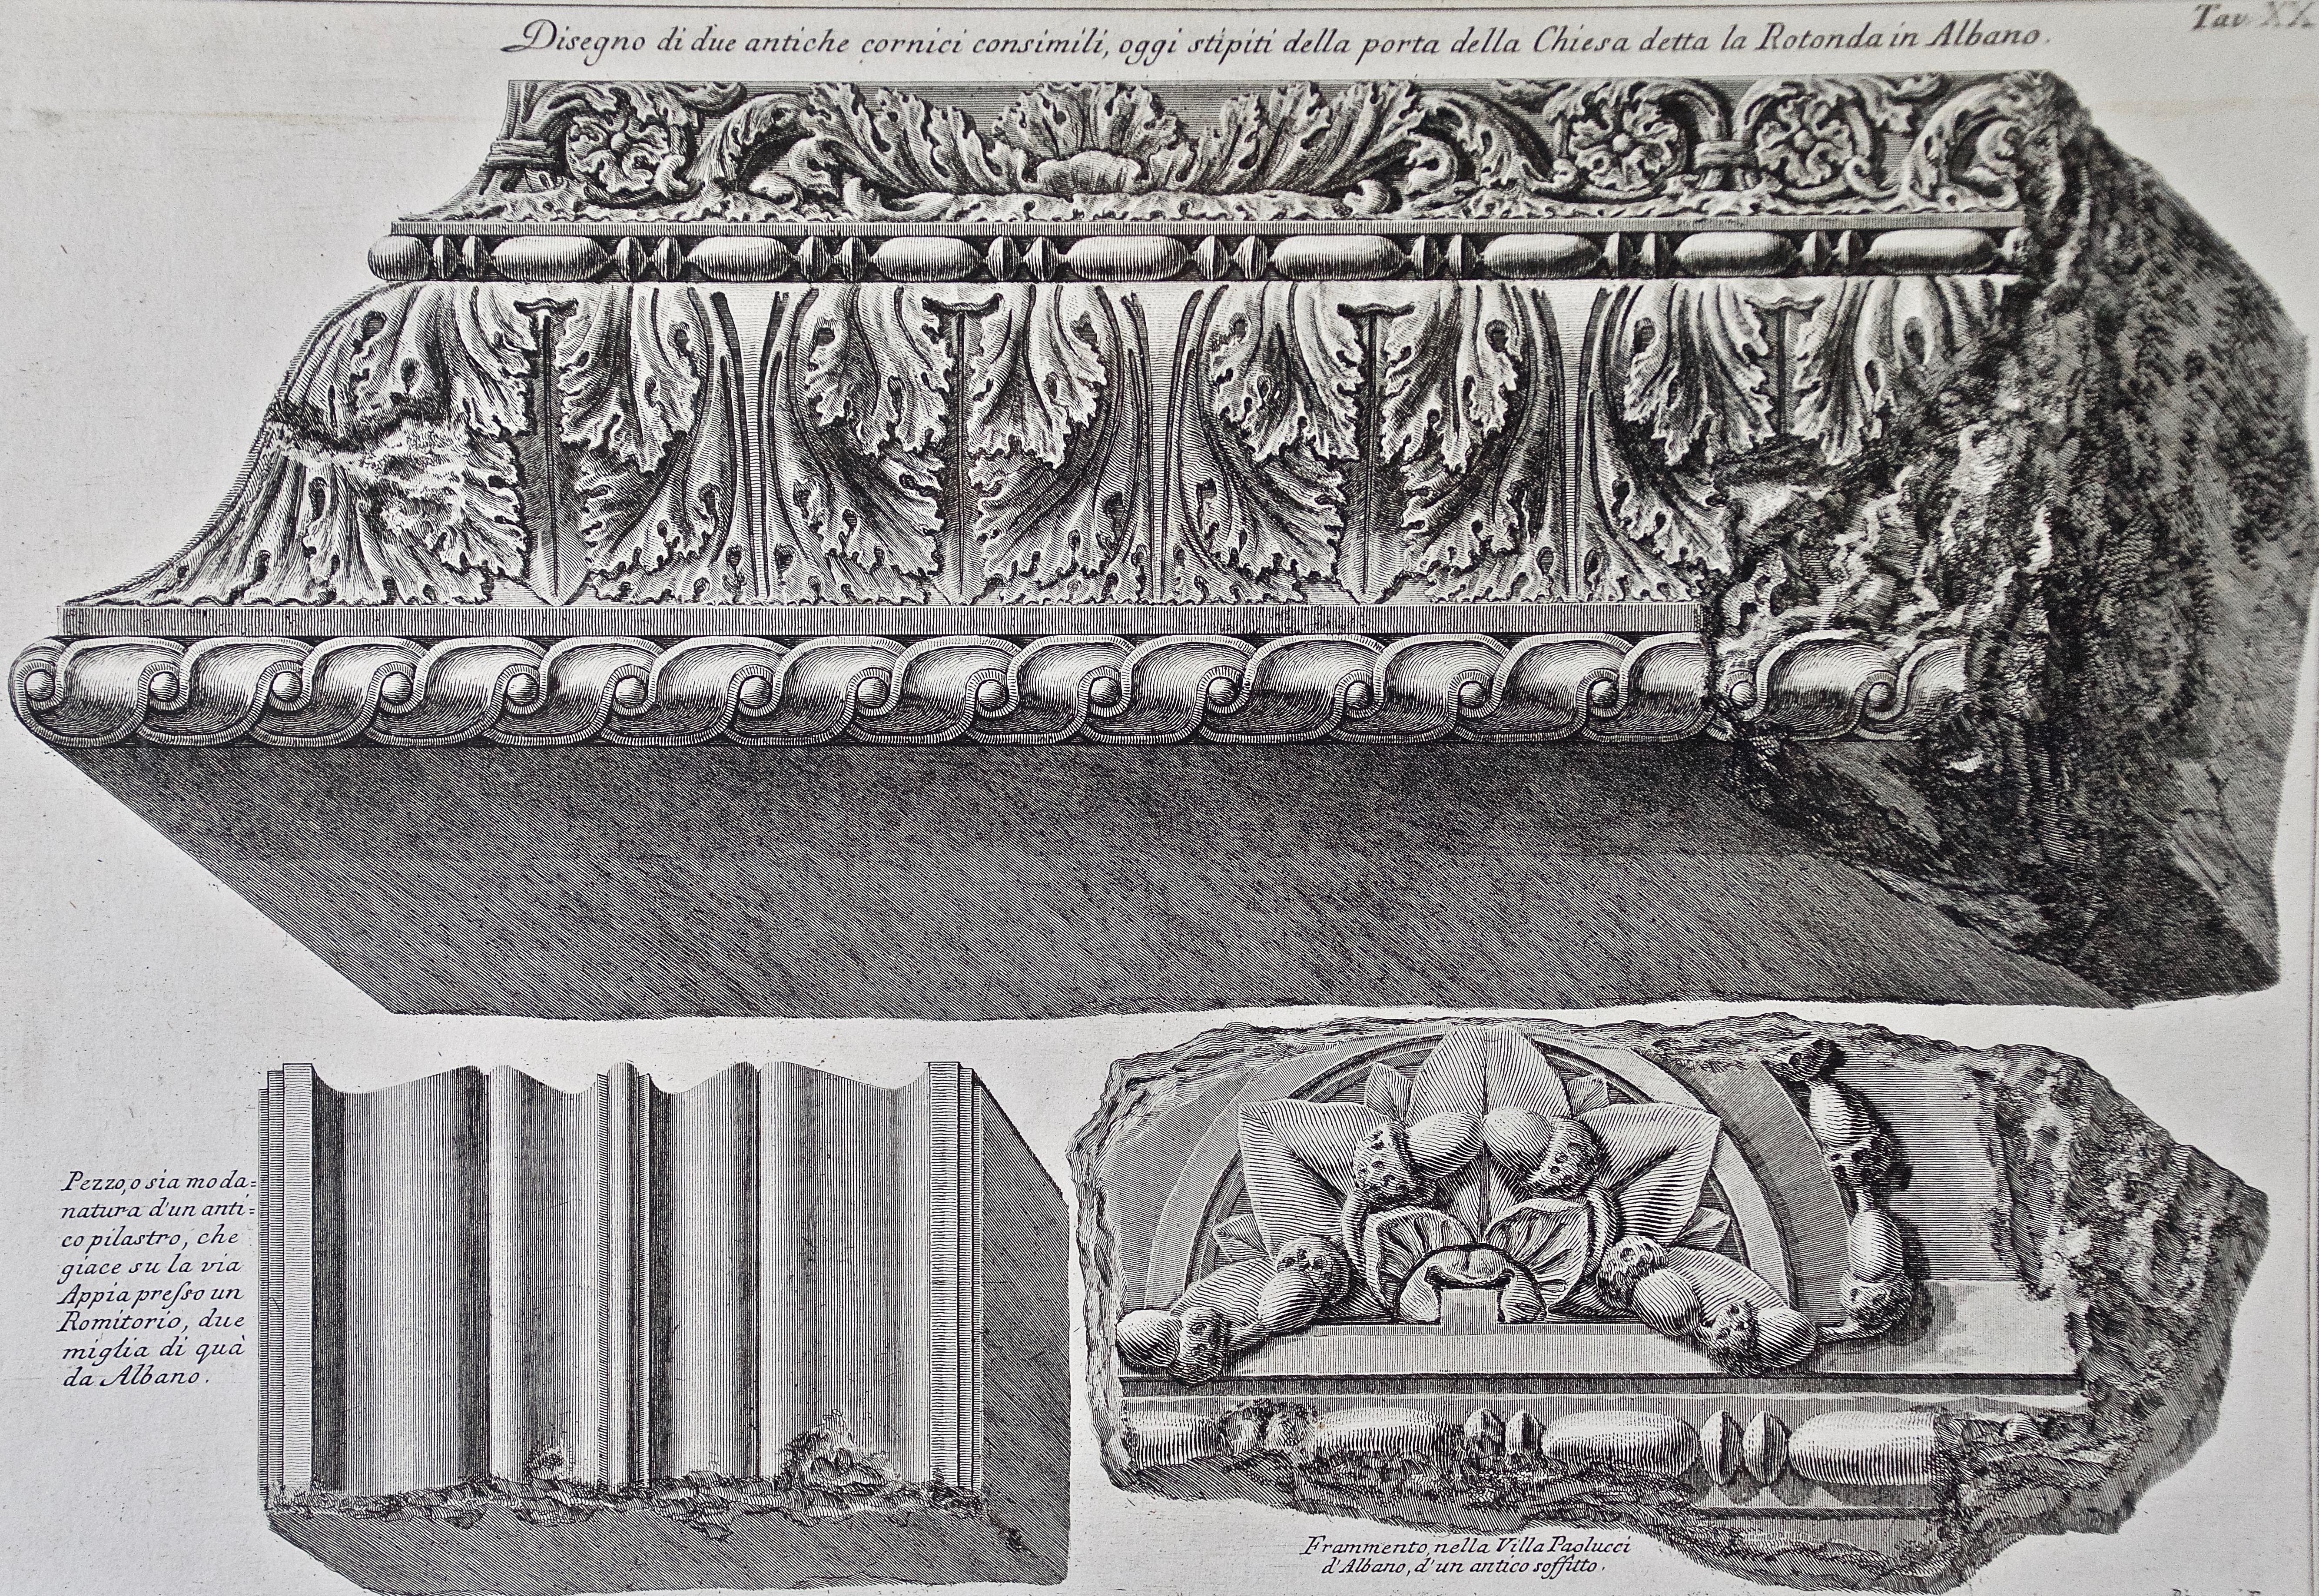 Piranesi Architectural Views of Ancient Roman Architectural Objects , 18th C. - Print by Giovanni Battista Piranesi